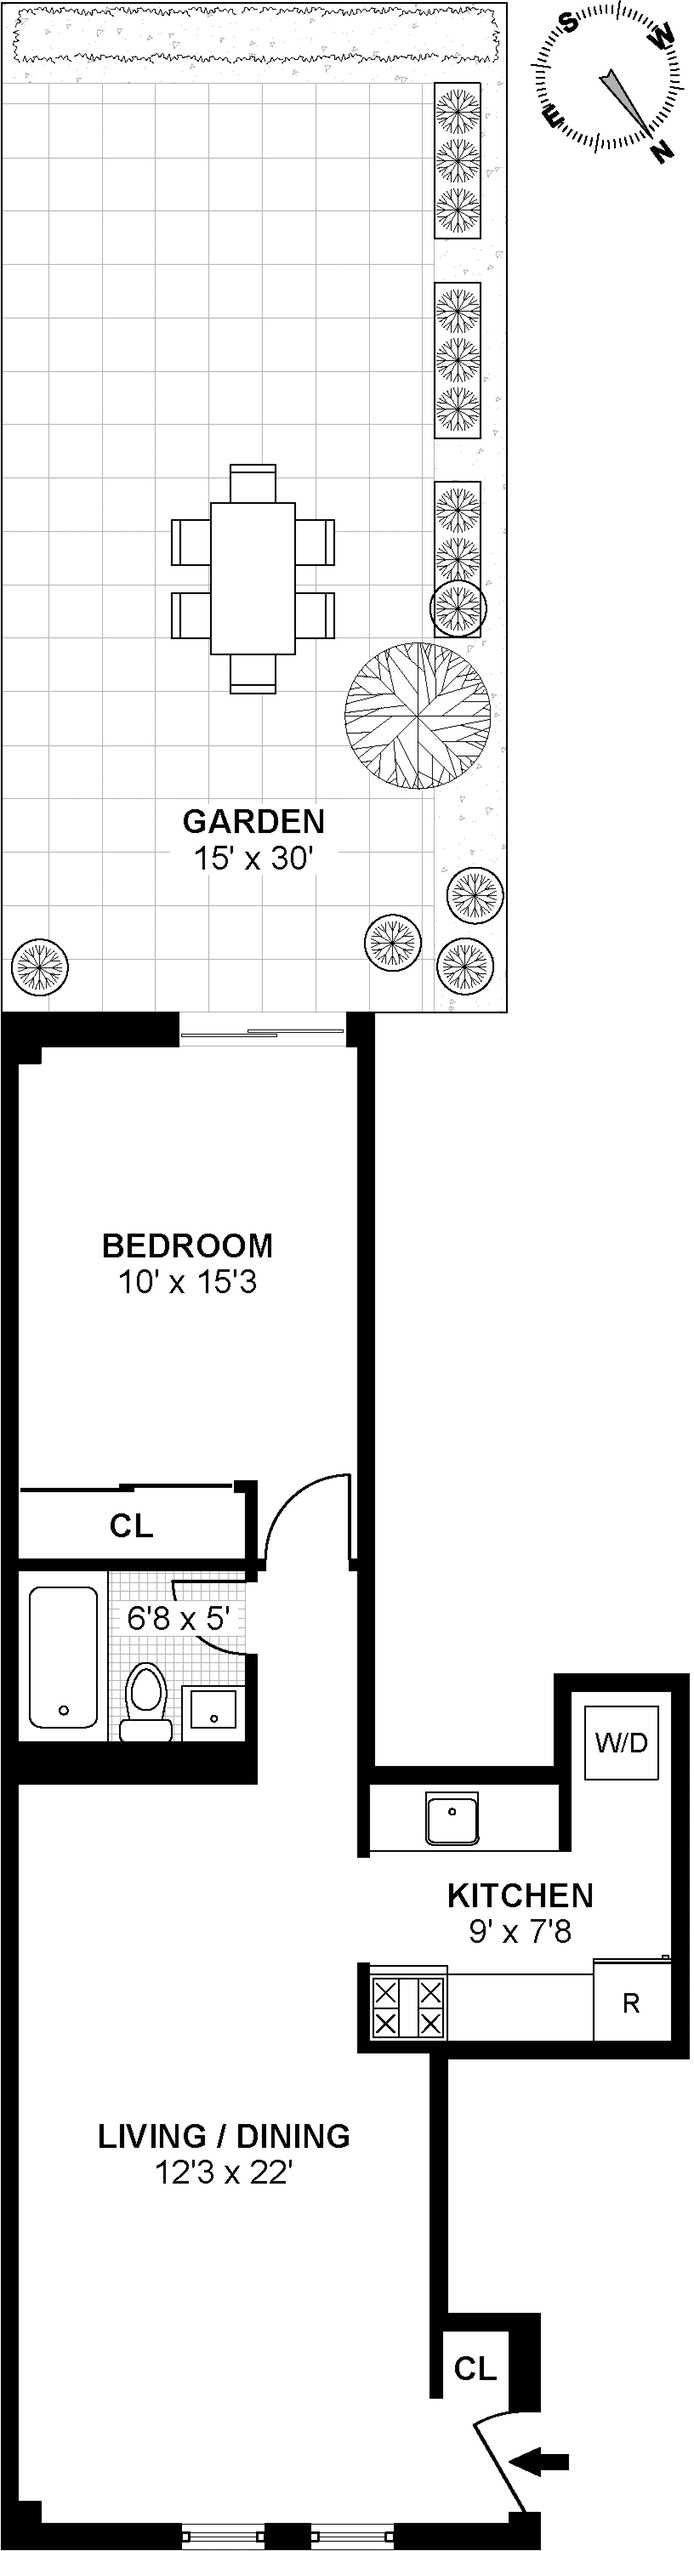 Floorplan for 36 Carroll Street, G